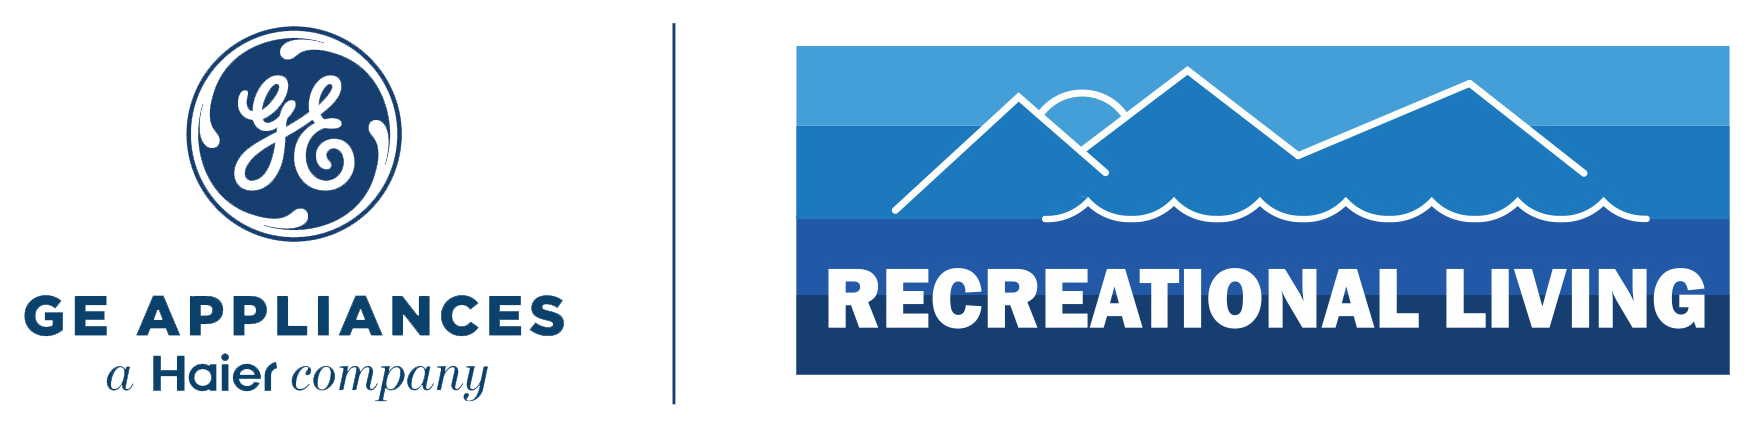 GEA Recreational Living Logo